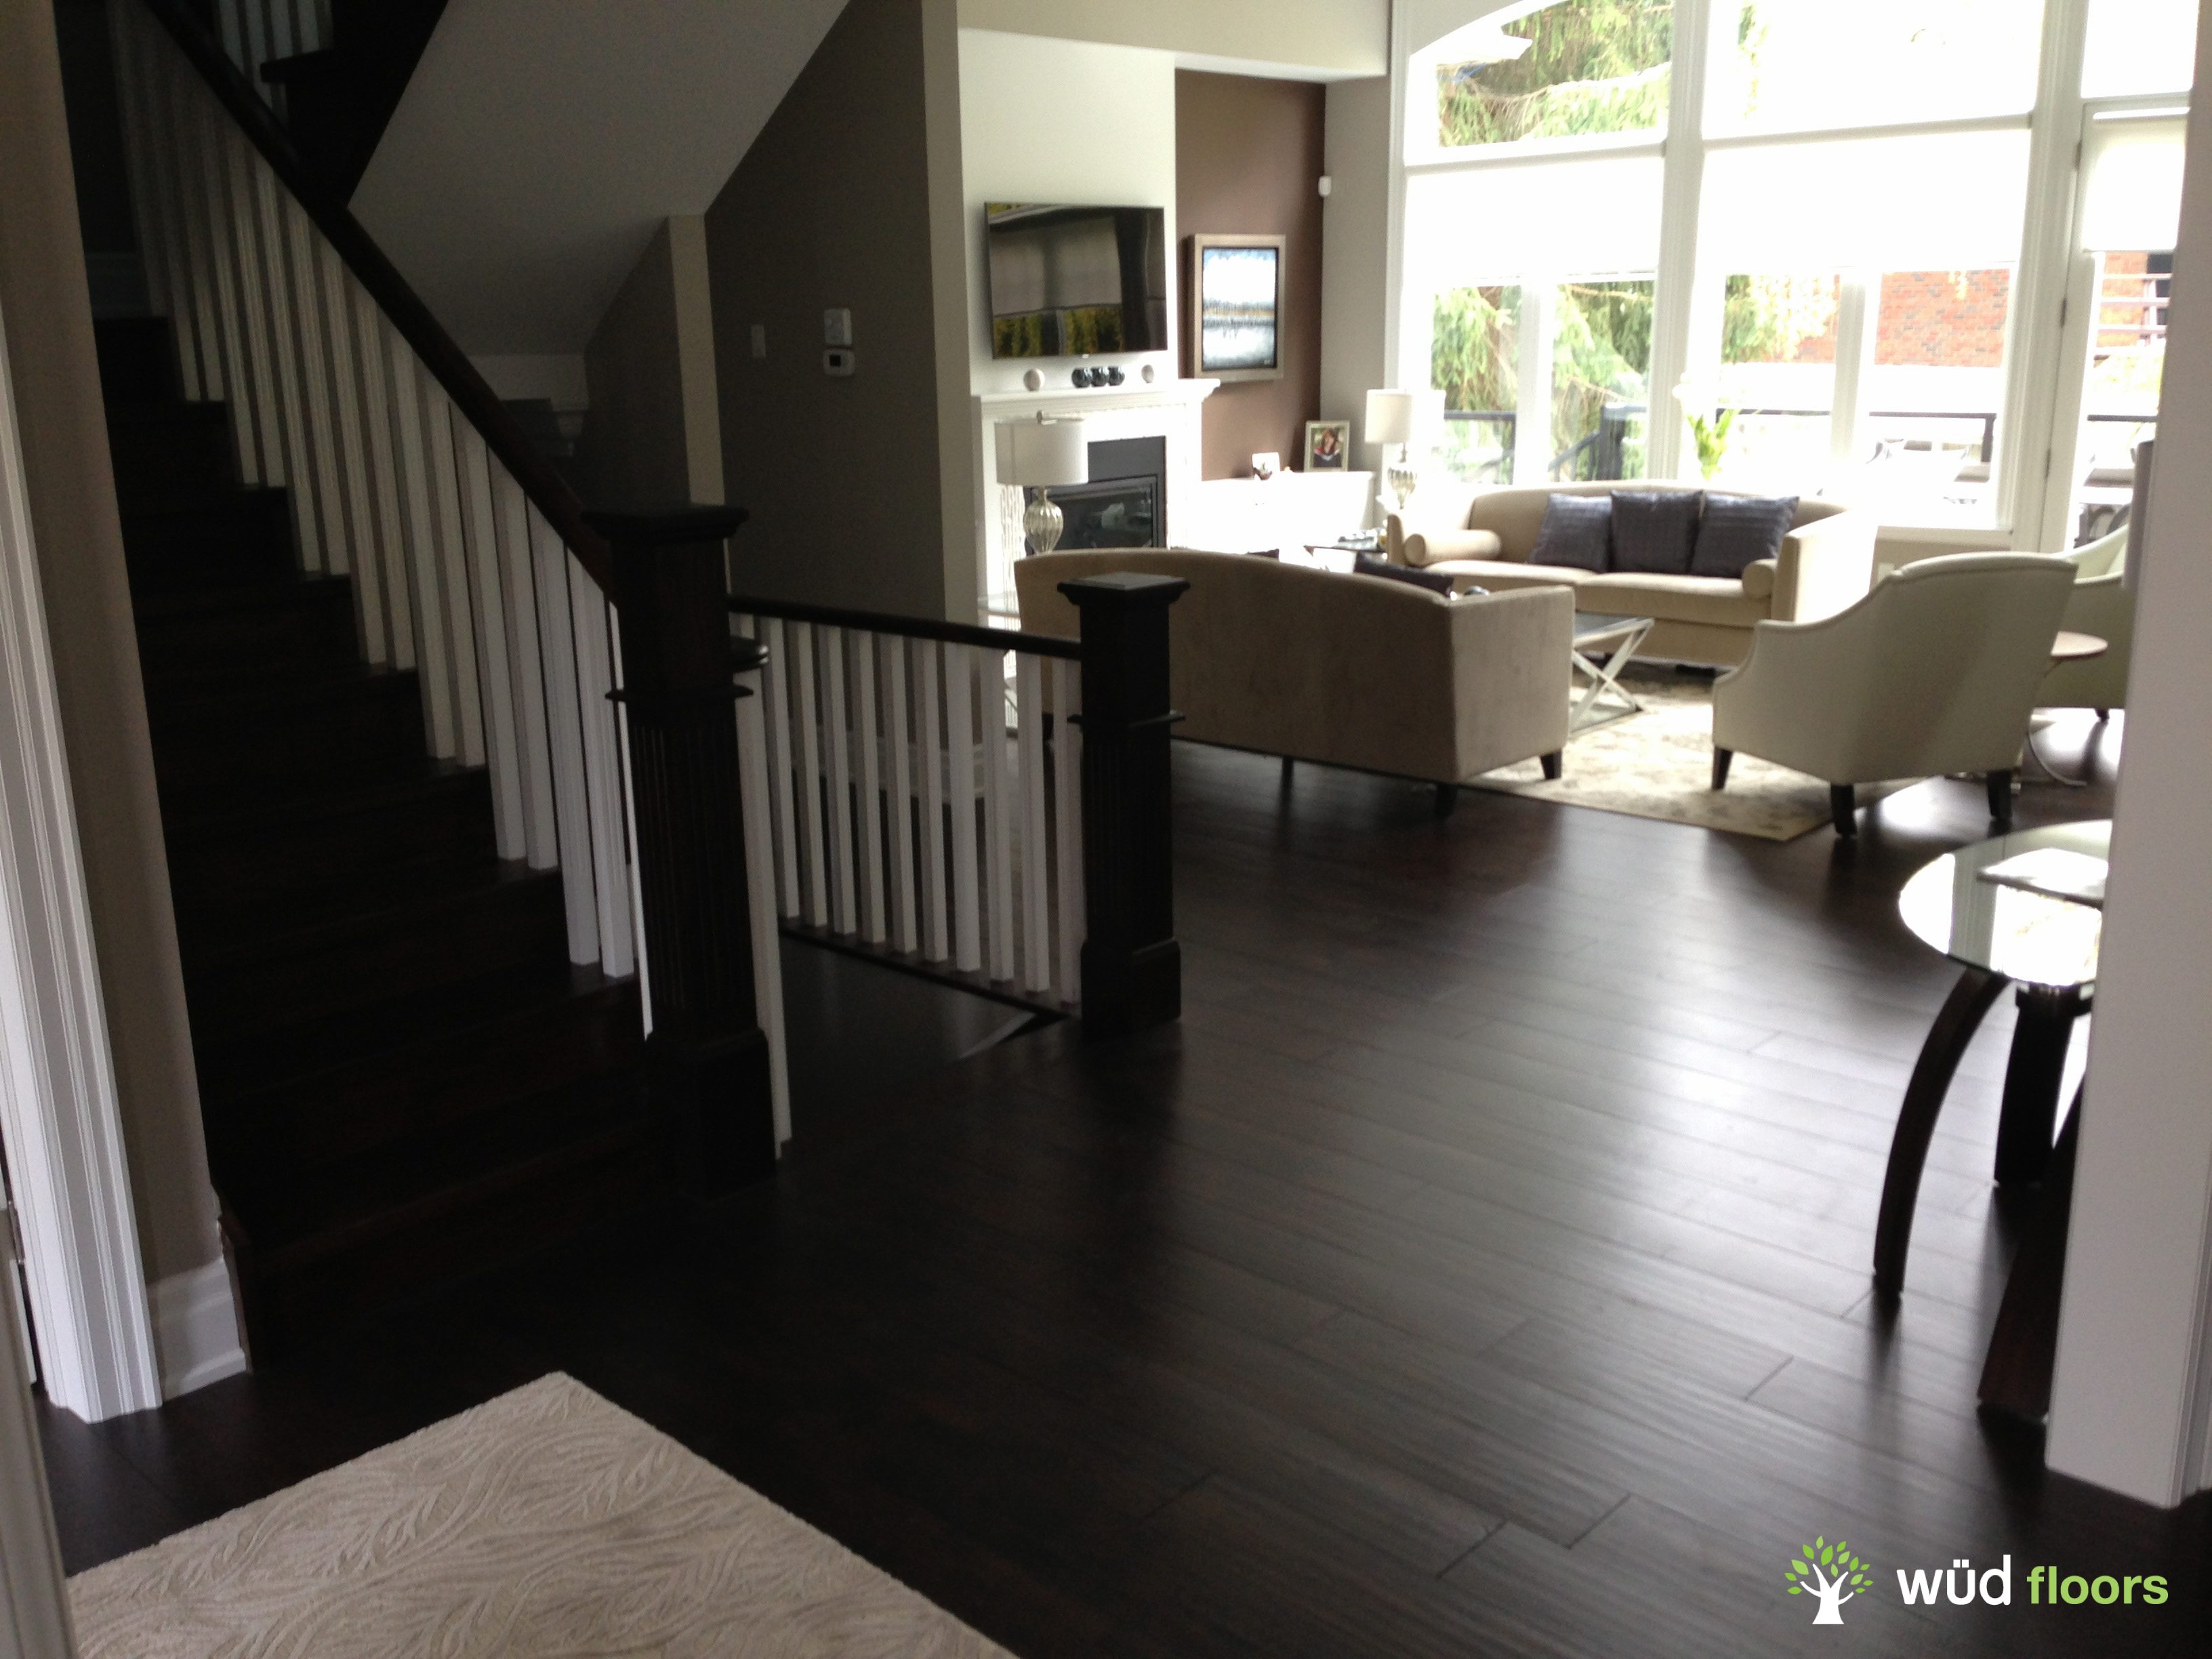 Beautiful living area and hallway with hardwood flooring